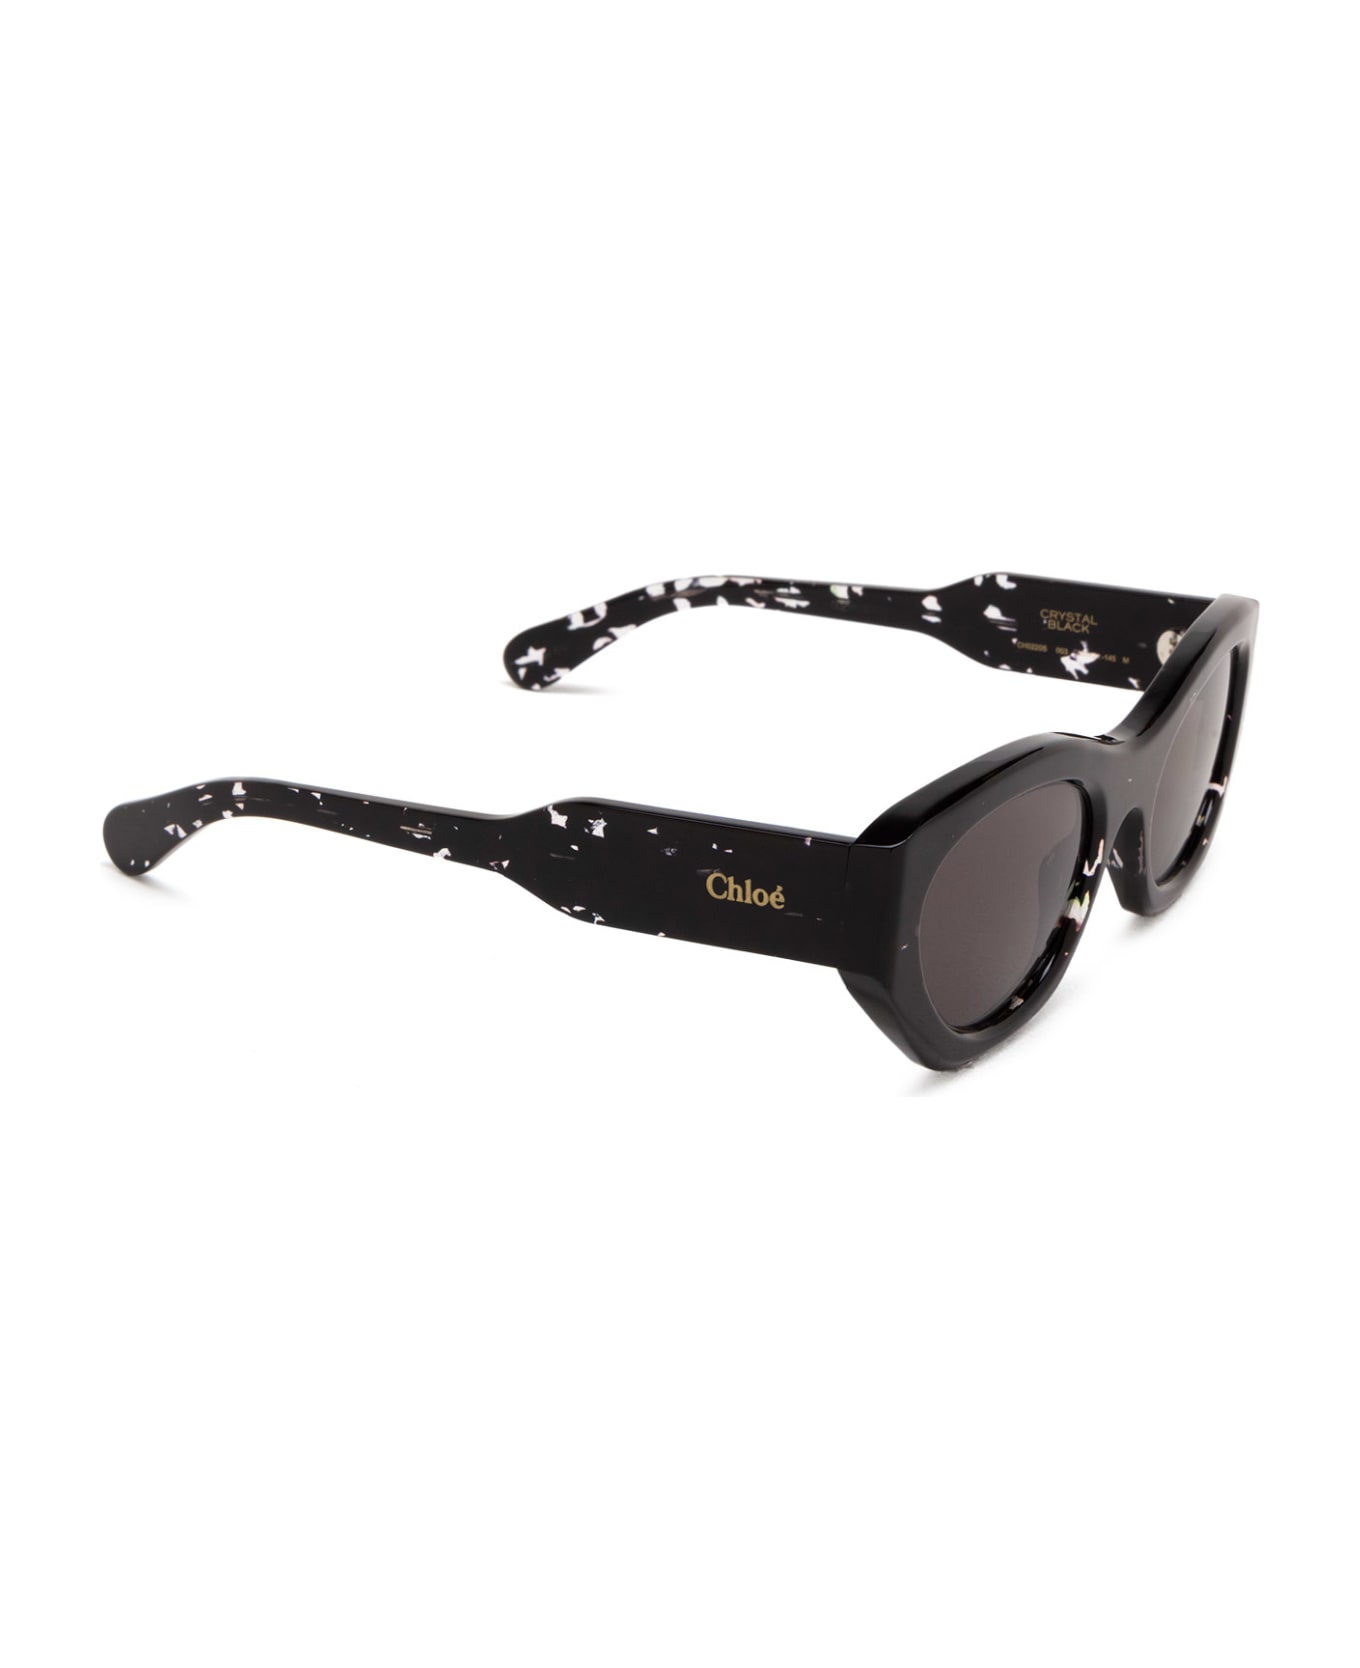 Chloé Eyewear Ch0220s Black Sunglasses - Black